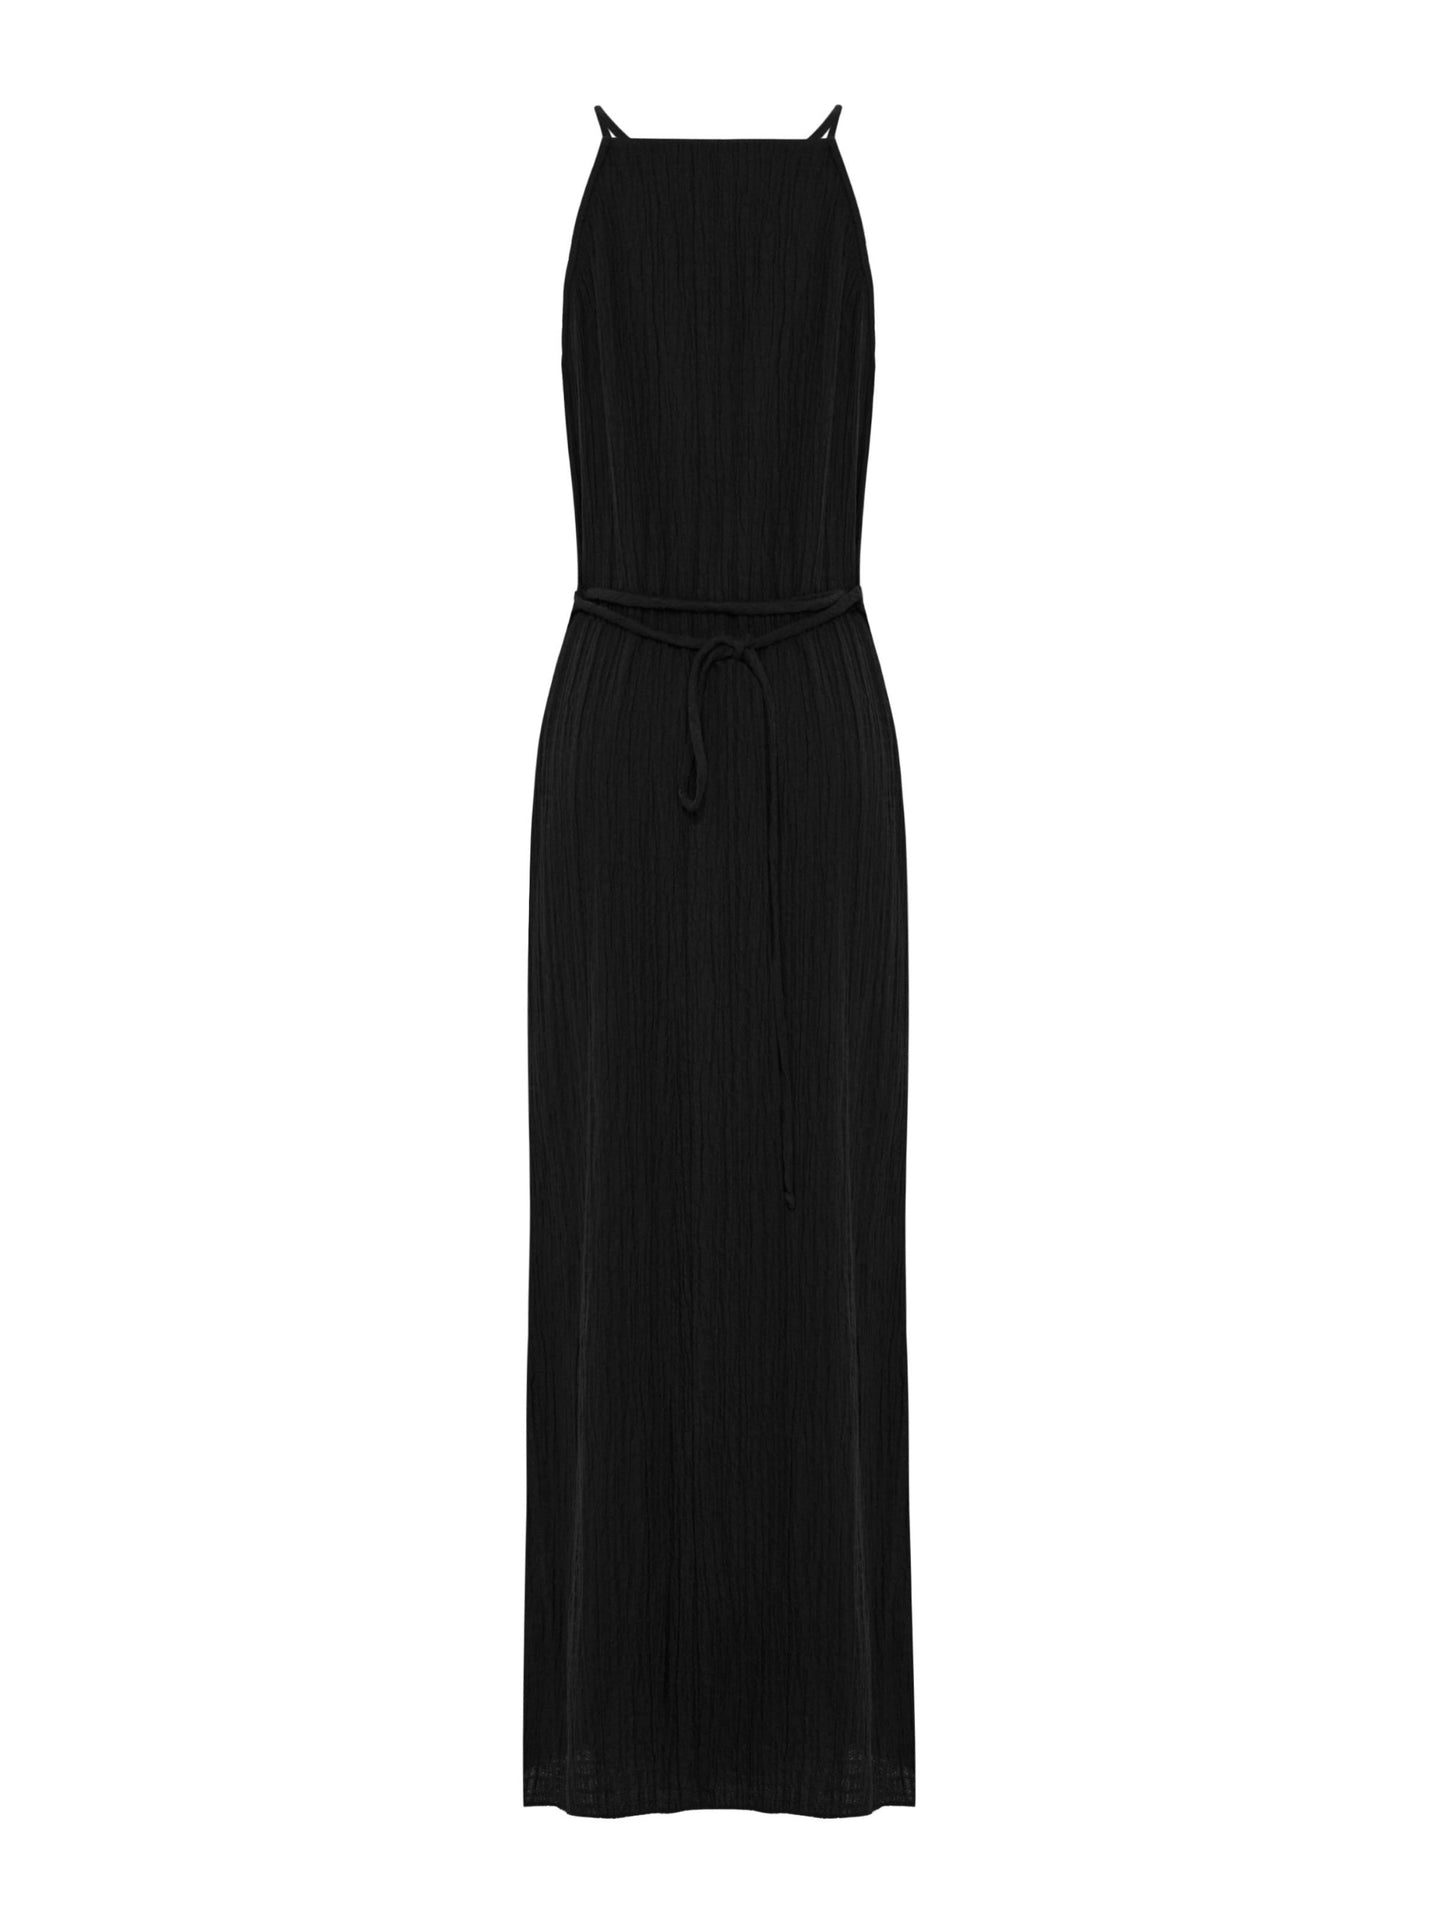 Siesta Dress - Black by The Handloom